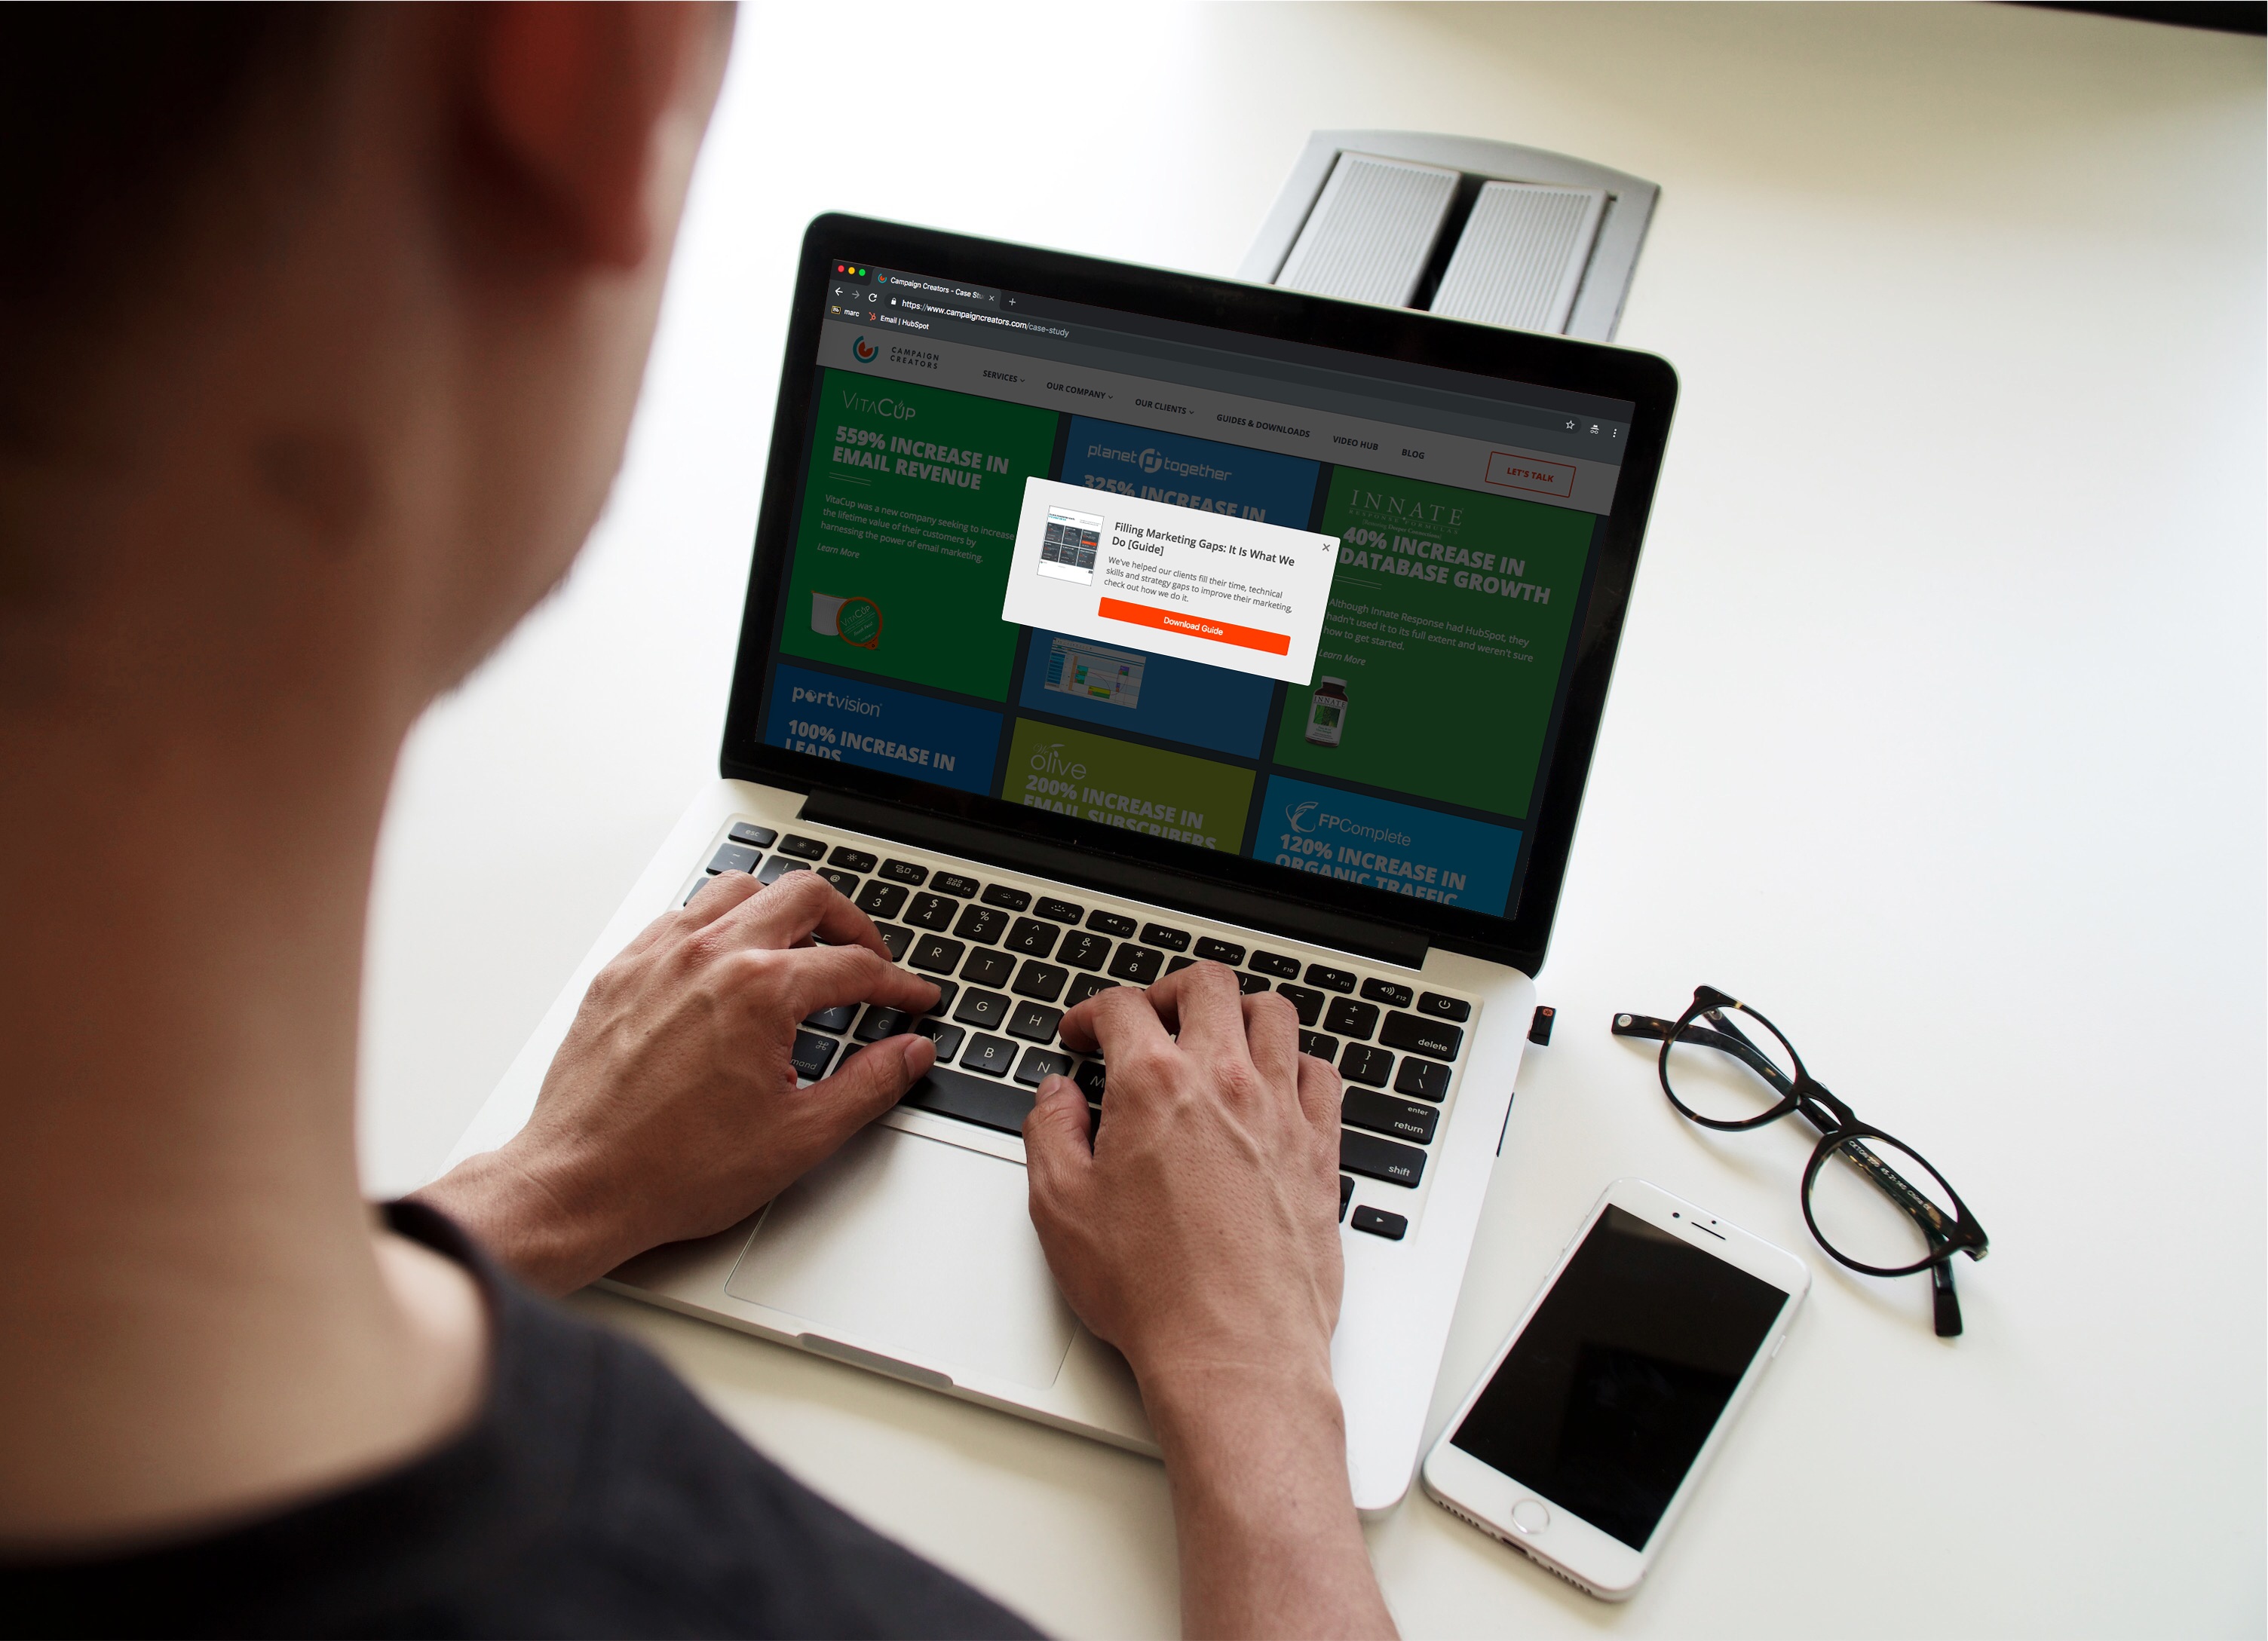 Customer viewing a website pop-up on a laptop